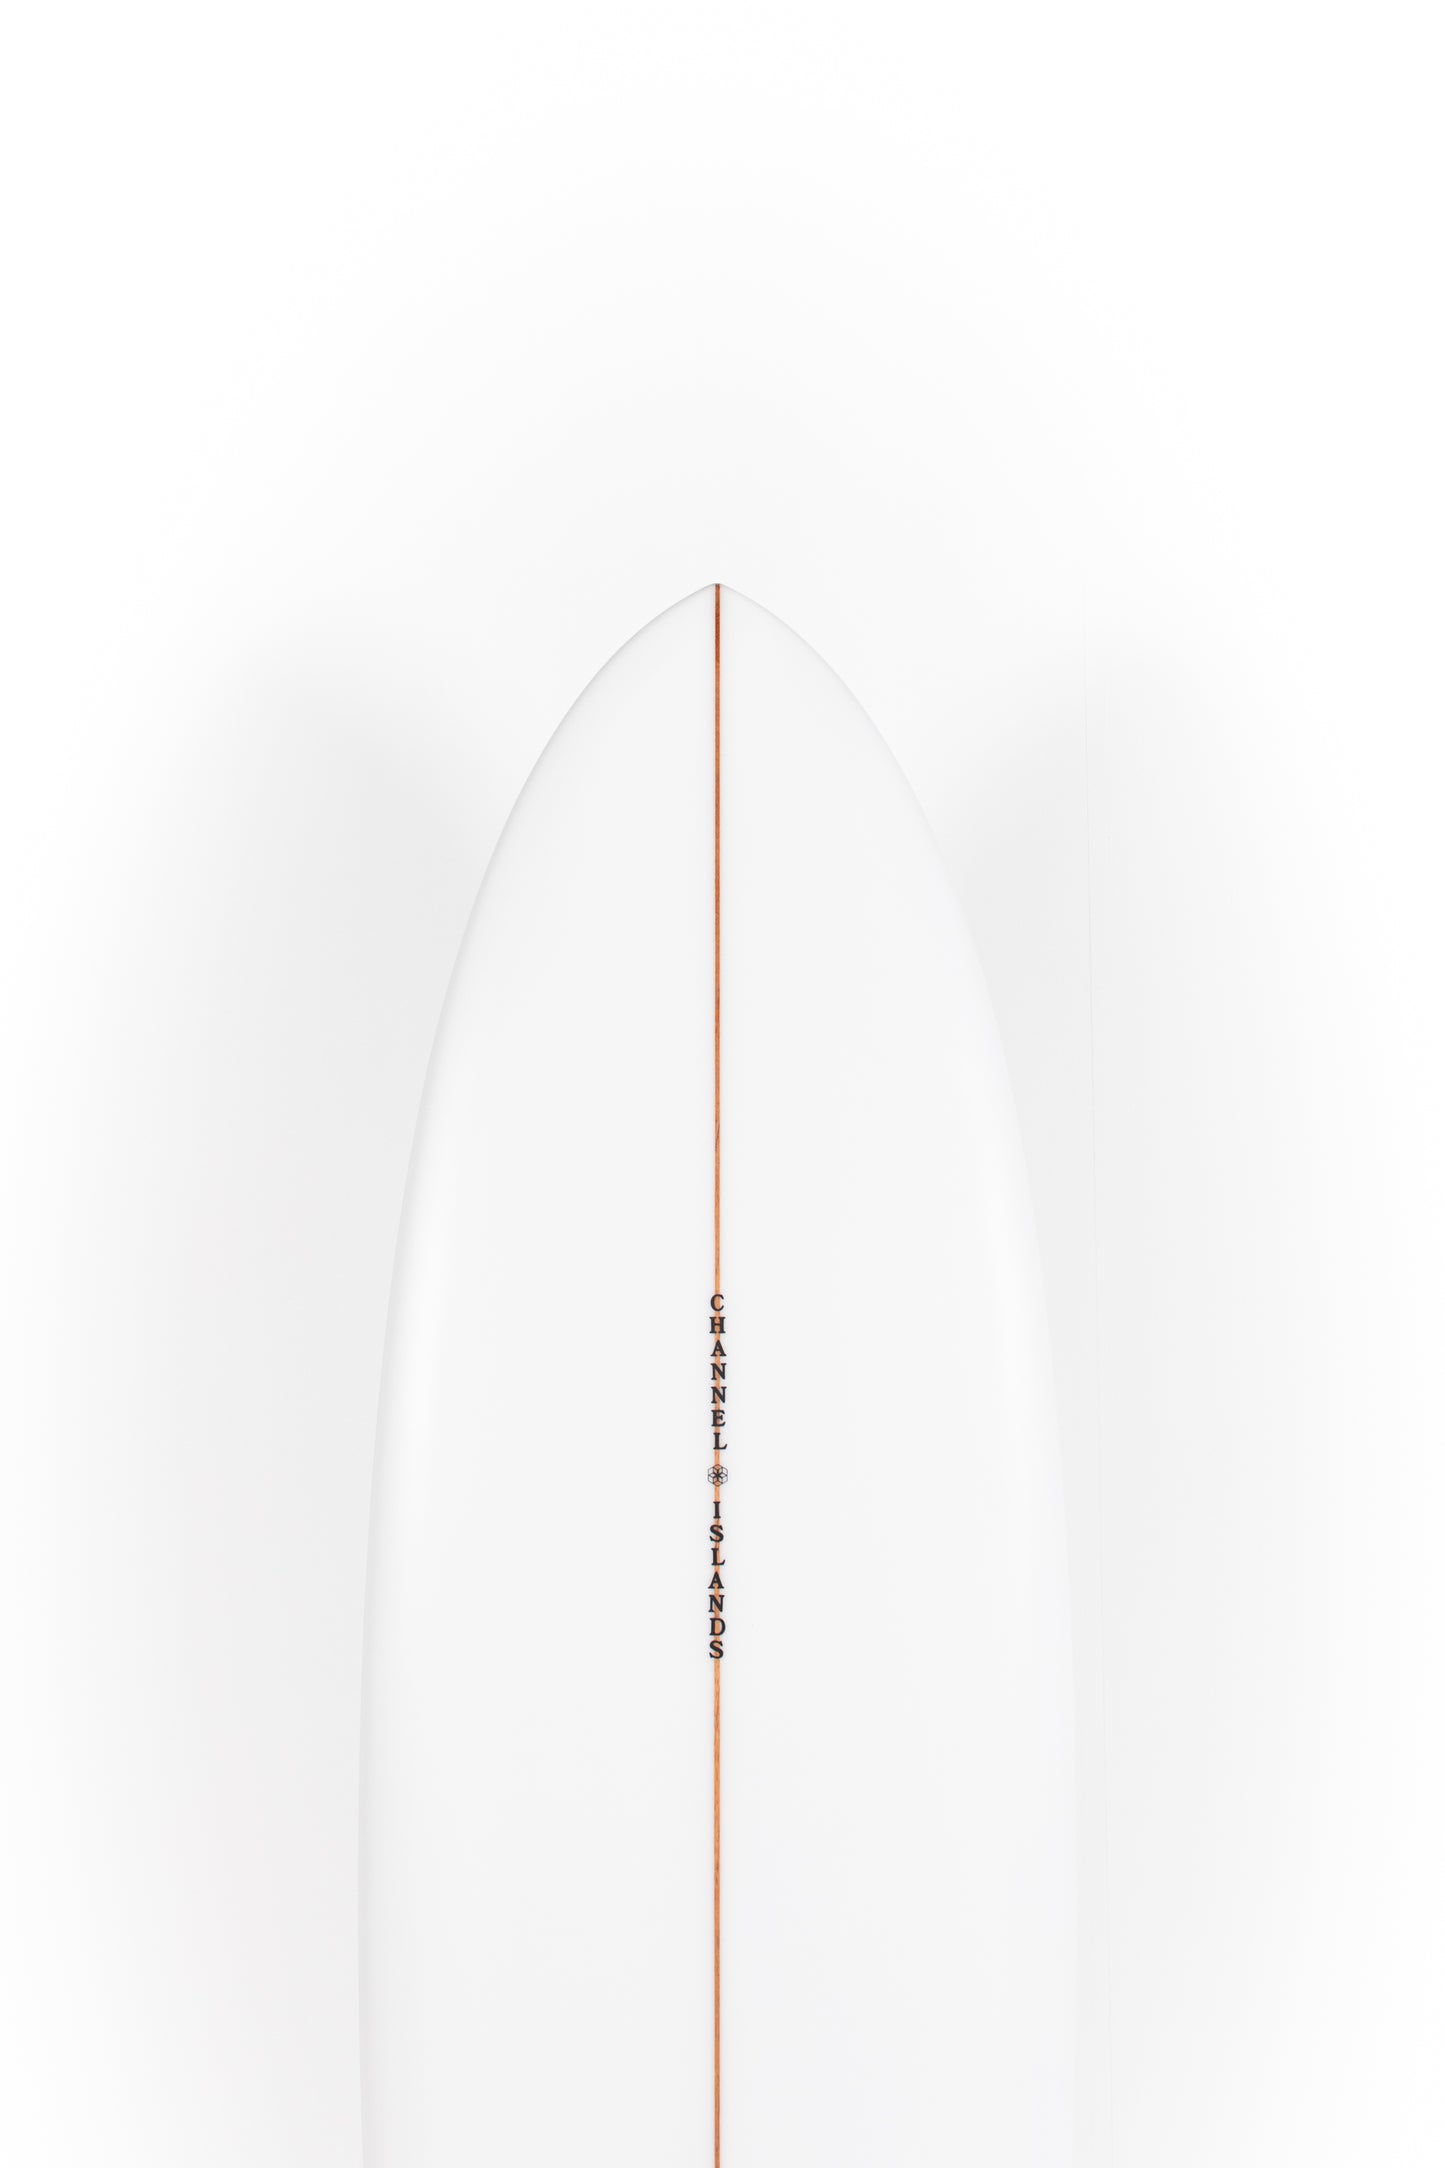 
                  
                    Pukas Surf Shop - Channel Islands - CI MID TWIN - 6'6" x 20 7/8 x 2 11/16 - 40,2L - CI27619
                  
                